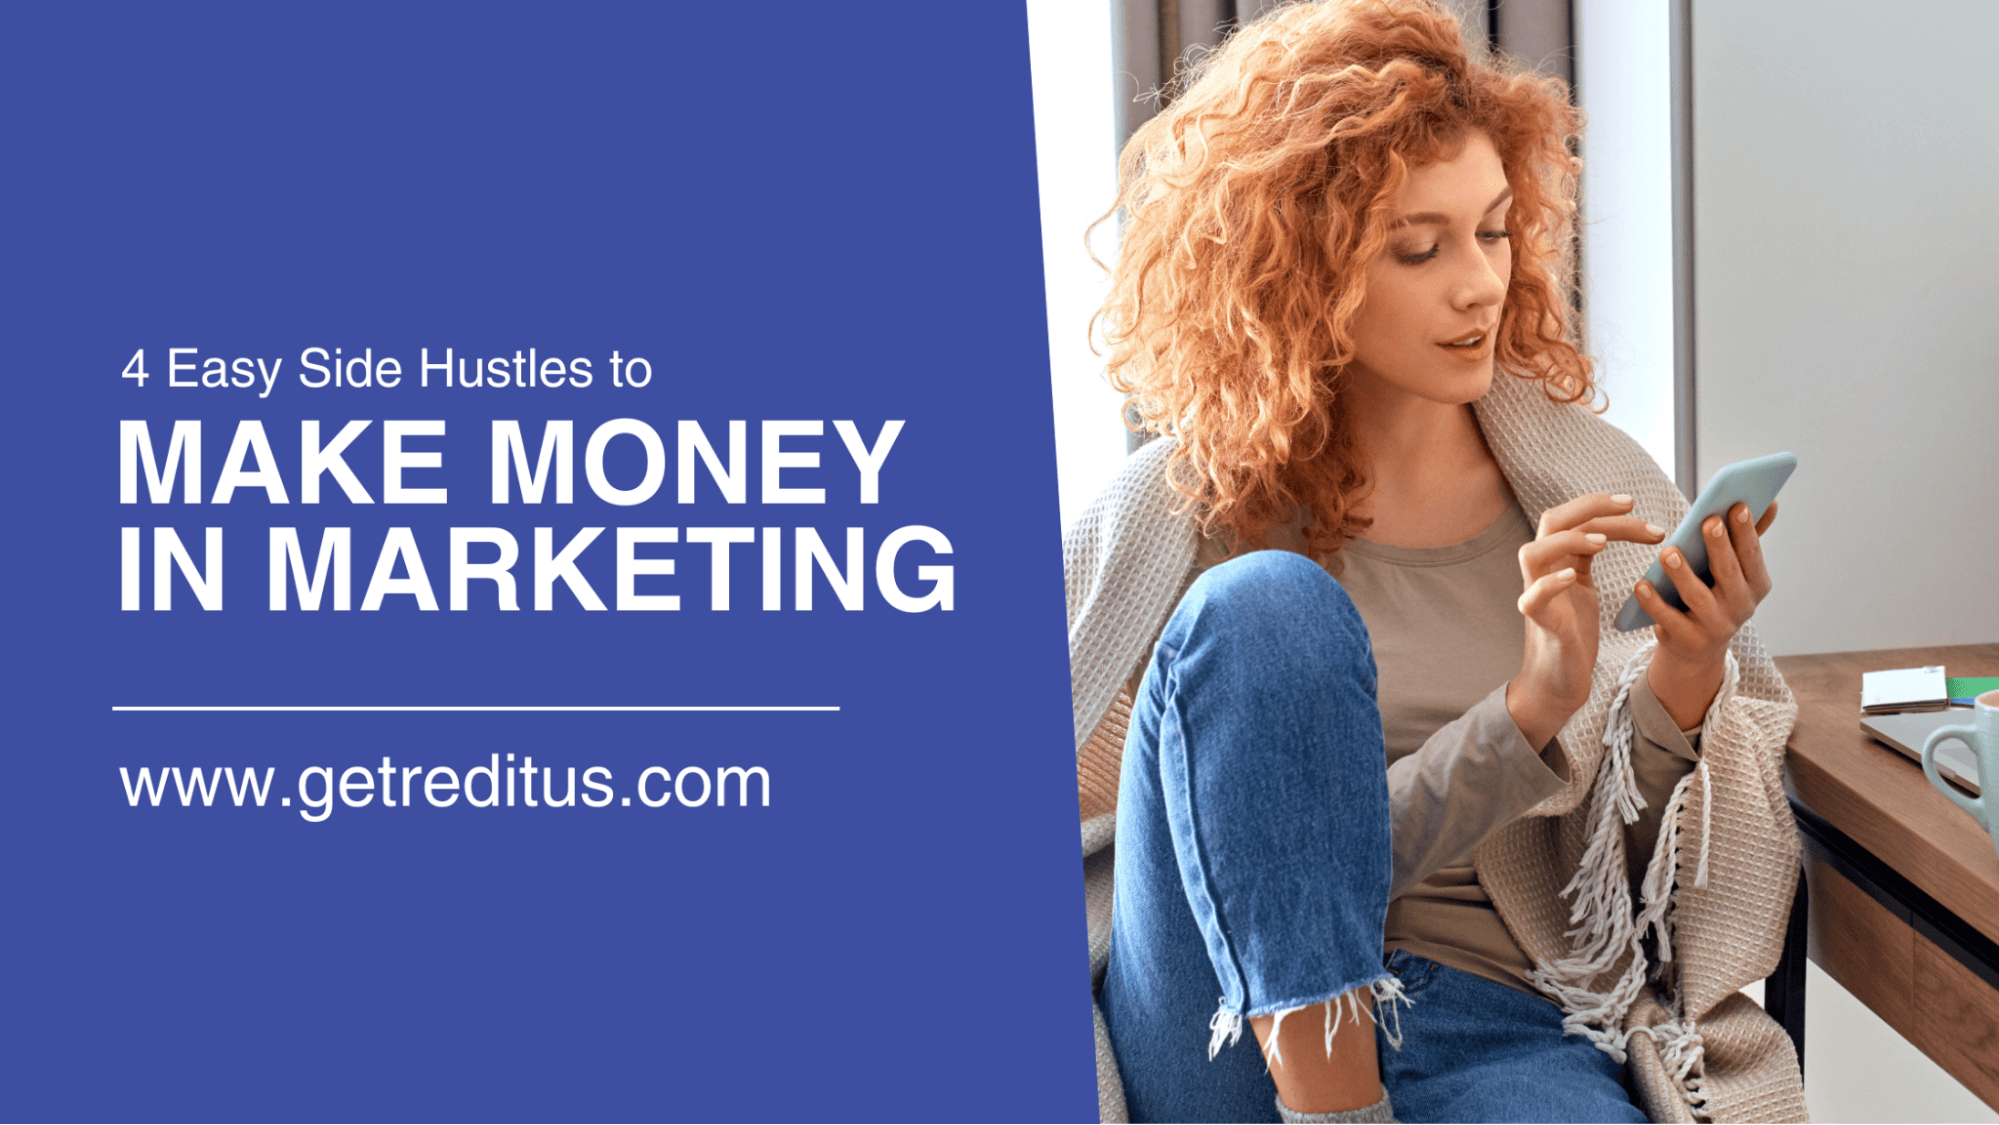 https://www.getreditus.com/blog/easy-side-hustles-to-make-extra-money-in-marketing/